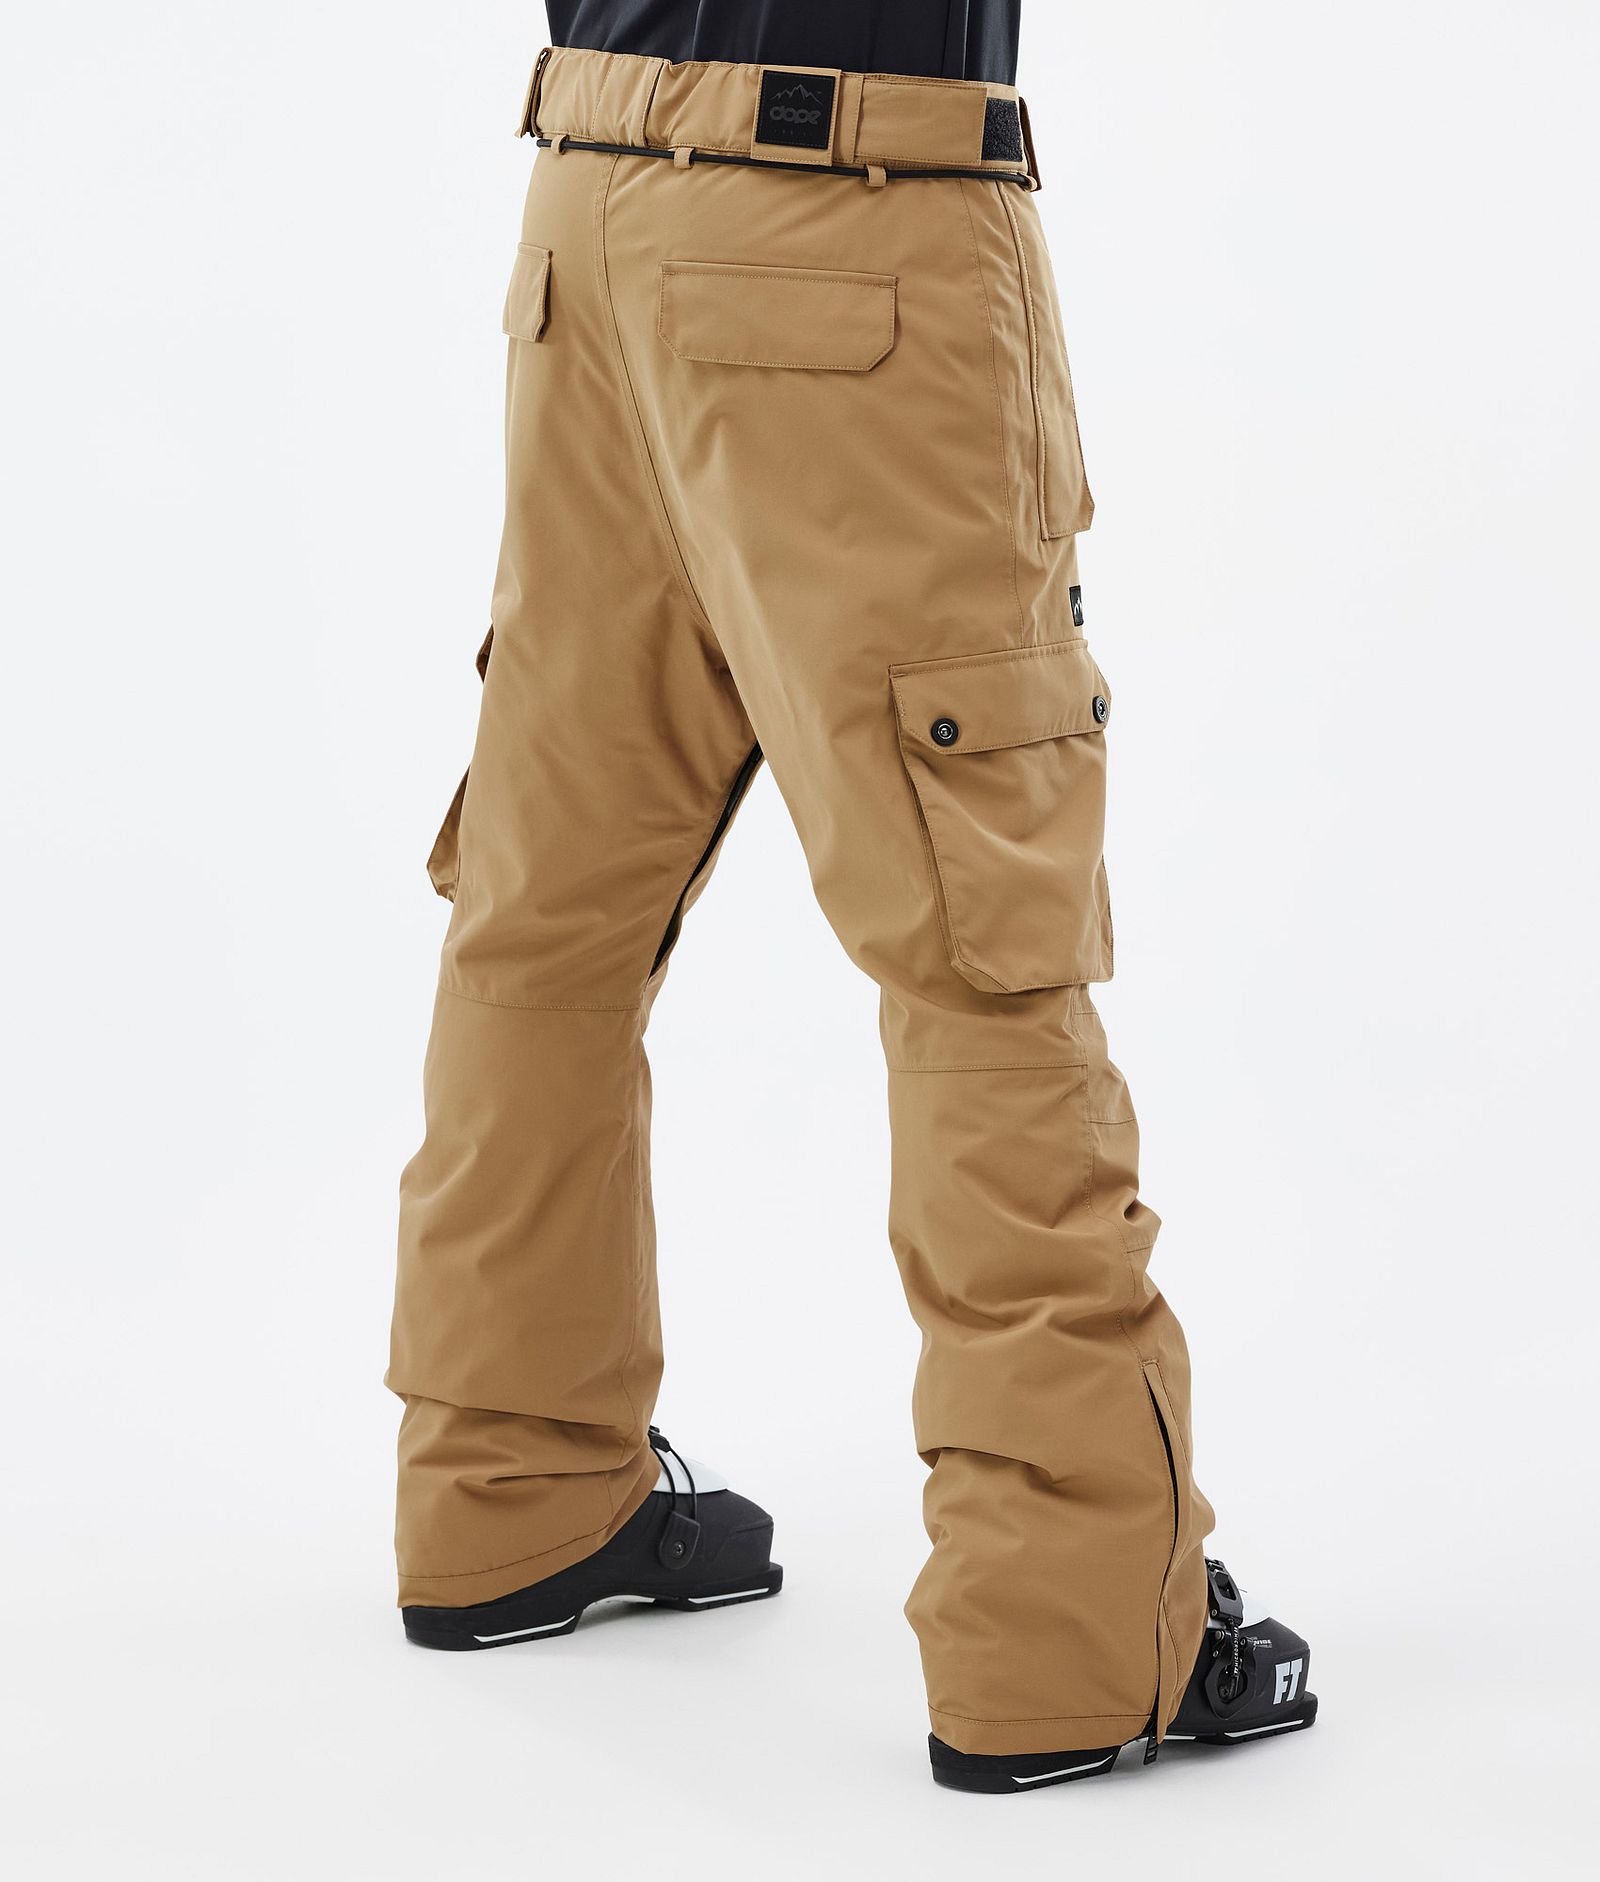 Iconic Pantalon de Ski Homme Gold